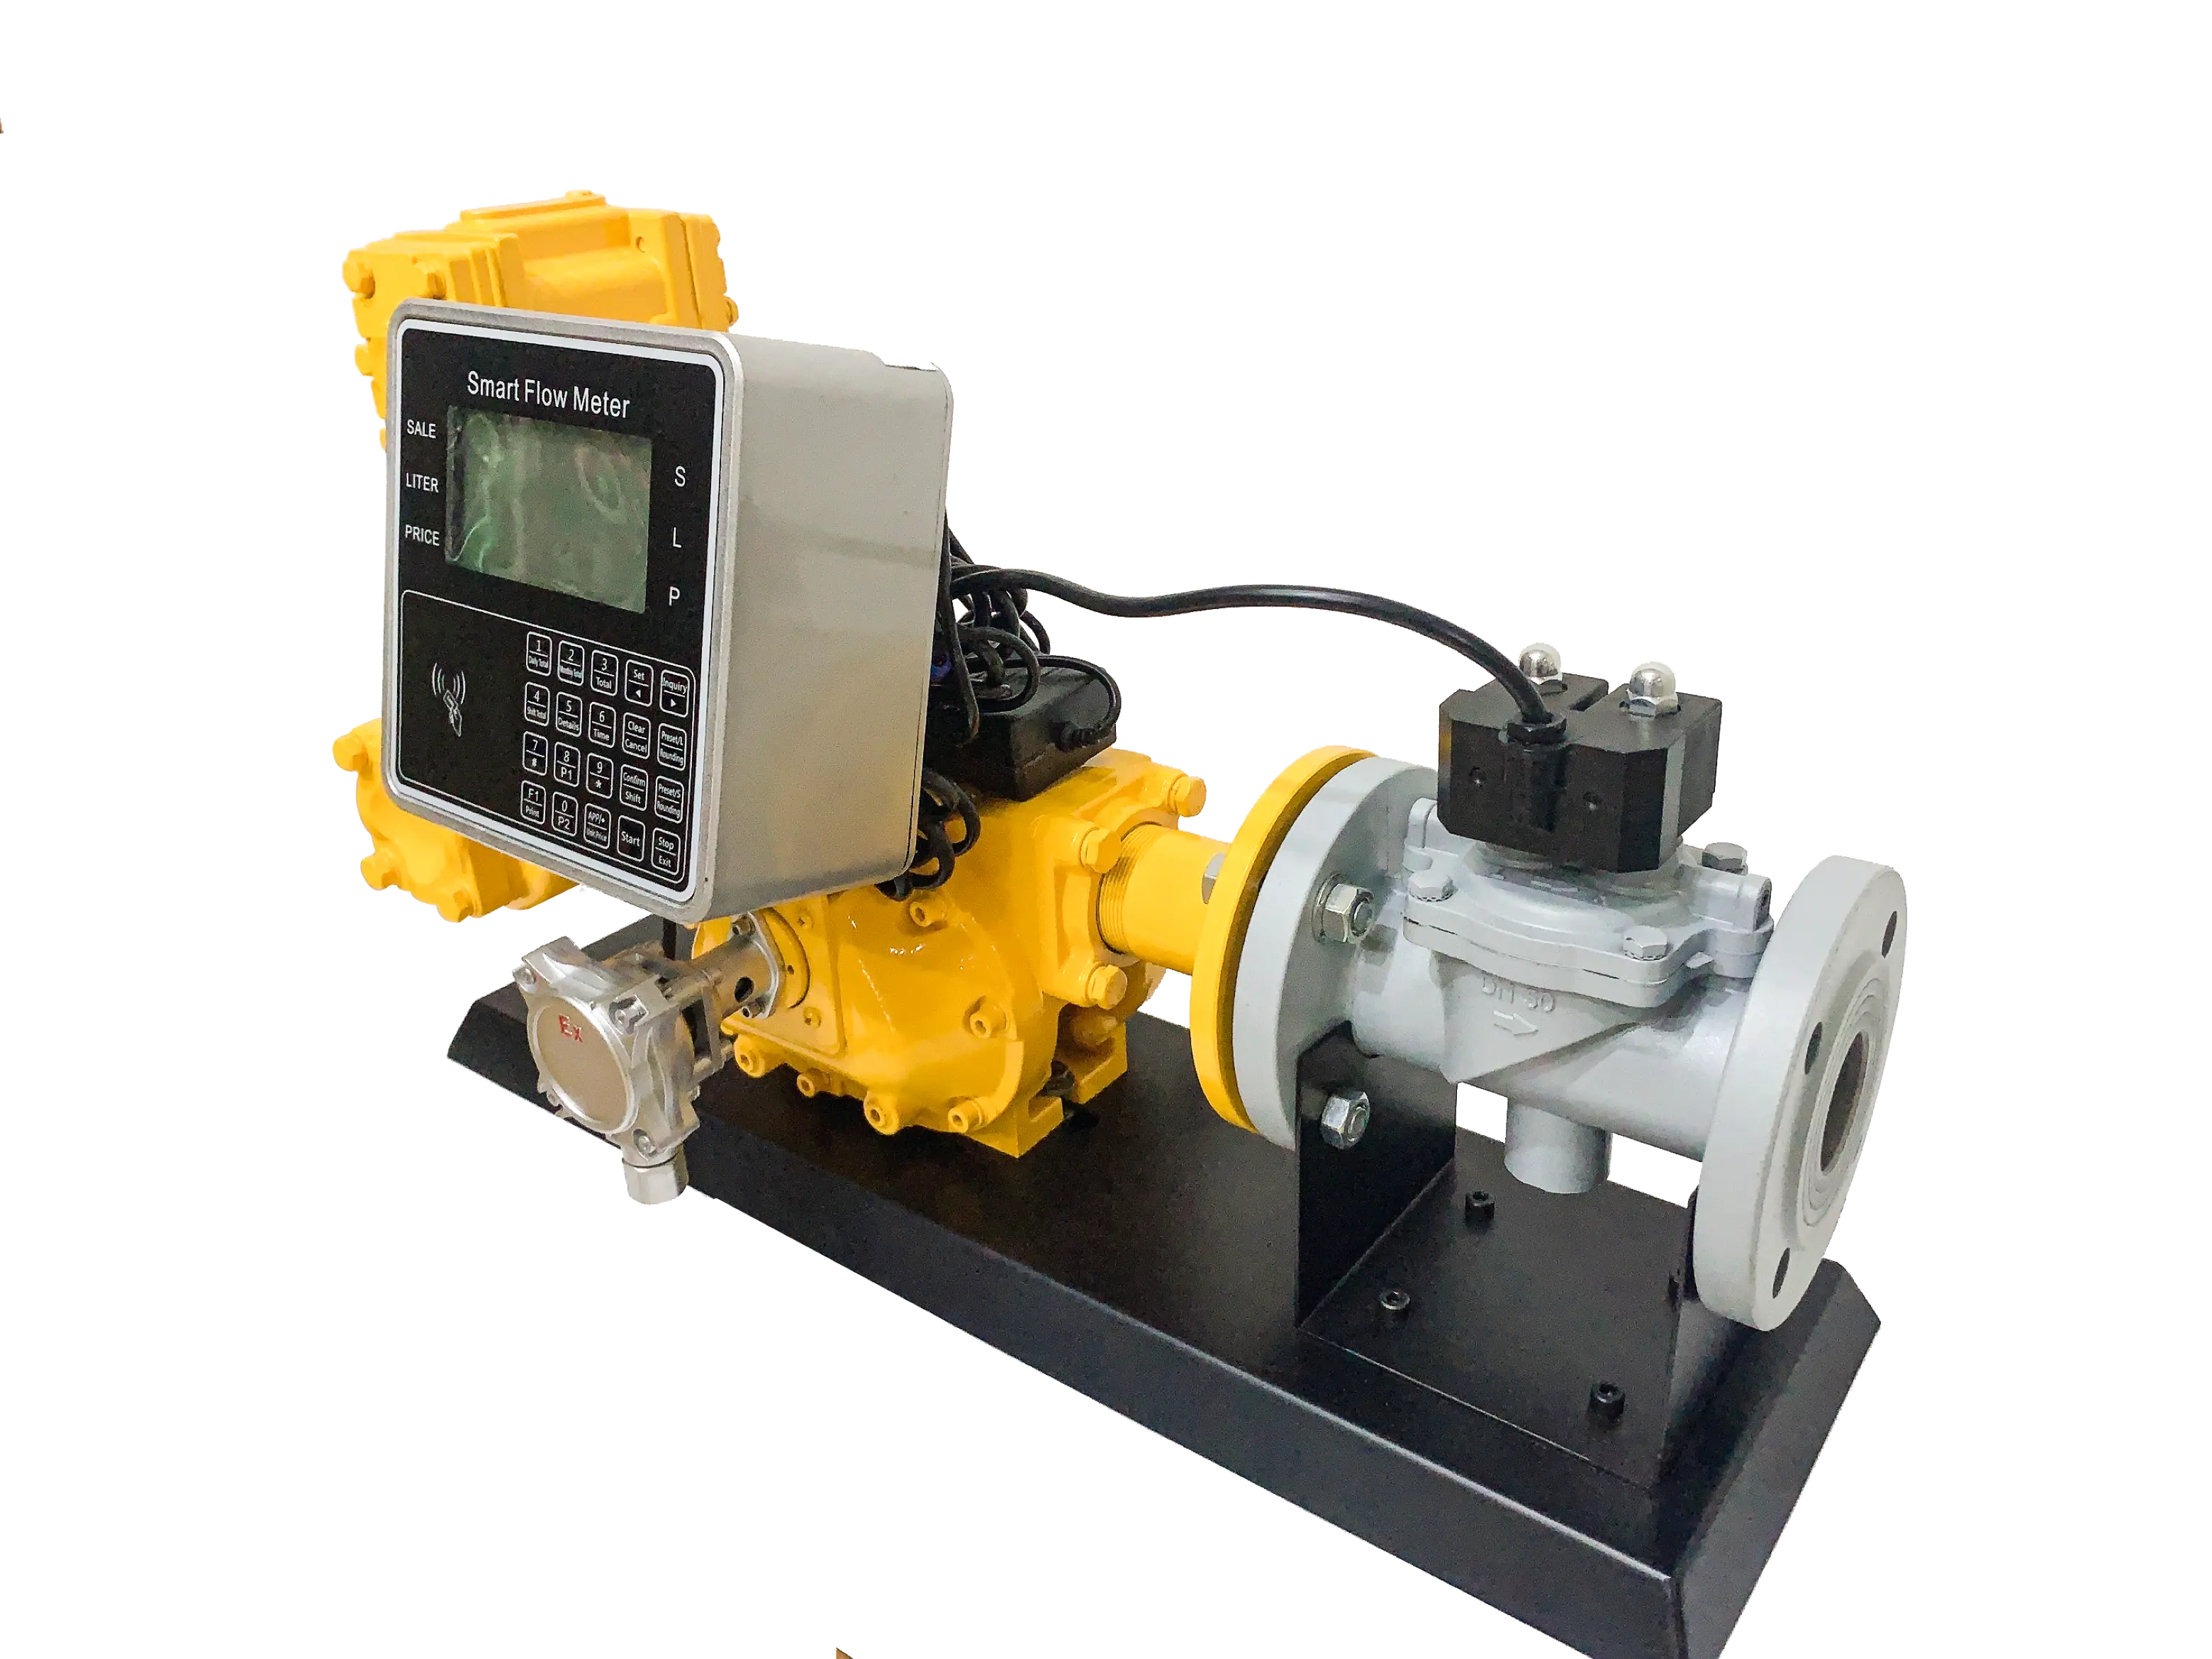 Meteran aliran pipa elektronik untuk meteran aliran industri minyak dan gas untuk komponen dispenser bahan bakar